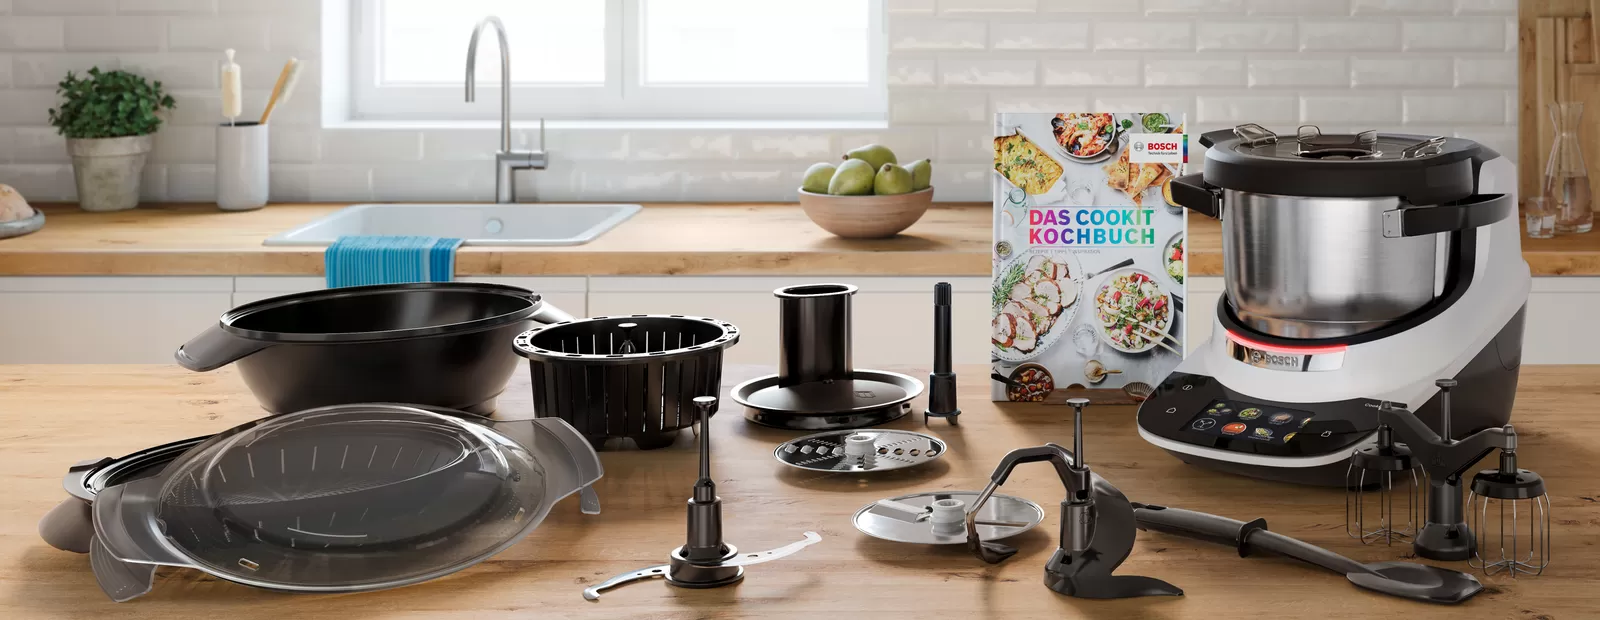 Кухонная машина Bosch Cookit